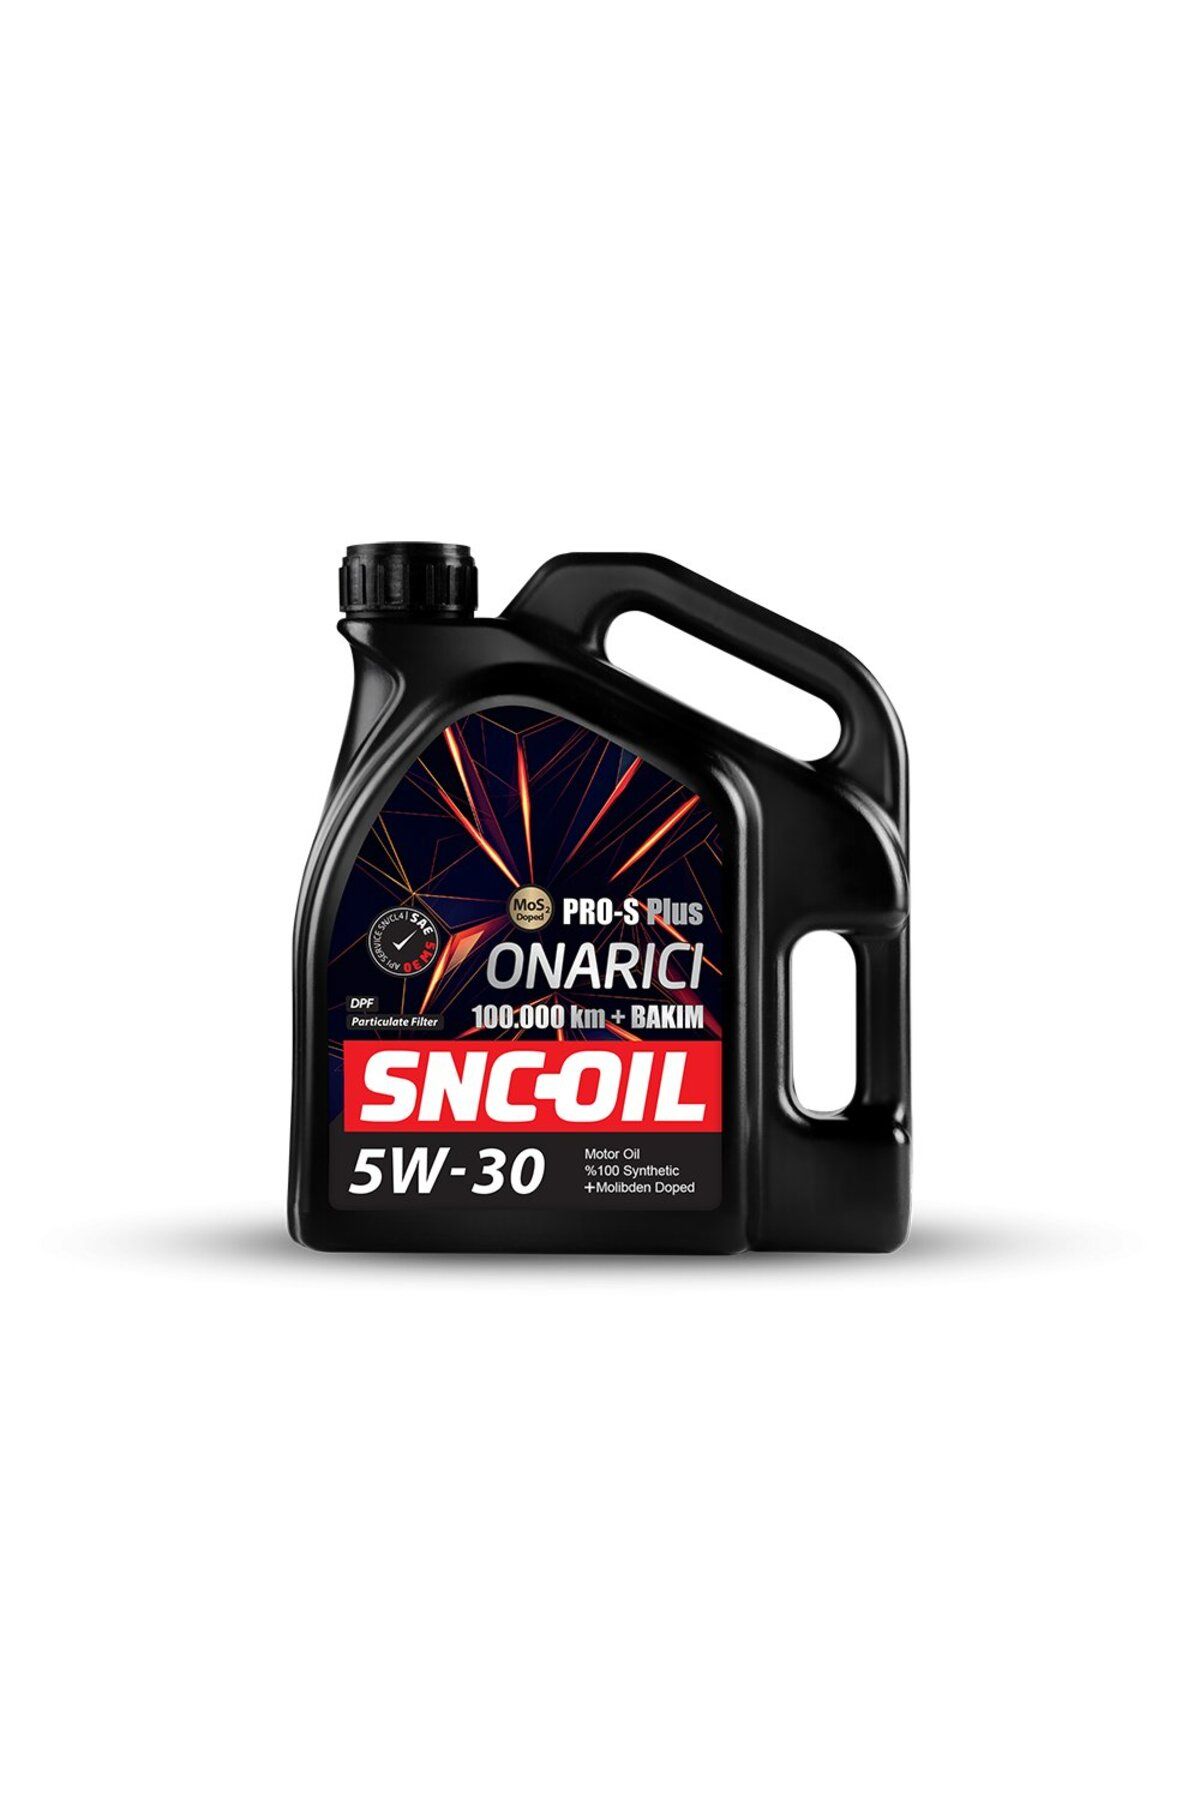 snc ICON GROUP - SNC-OIL 100.000 Km + Bakım Pro-S Plus Onarıcı 5W-30 Motor Yağı(4 Litre)